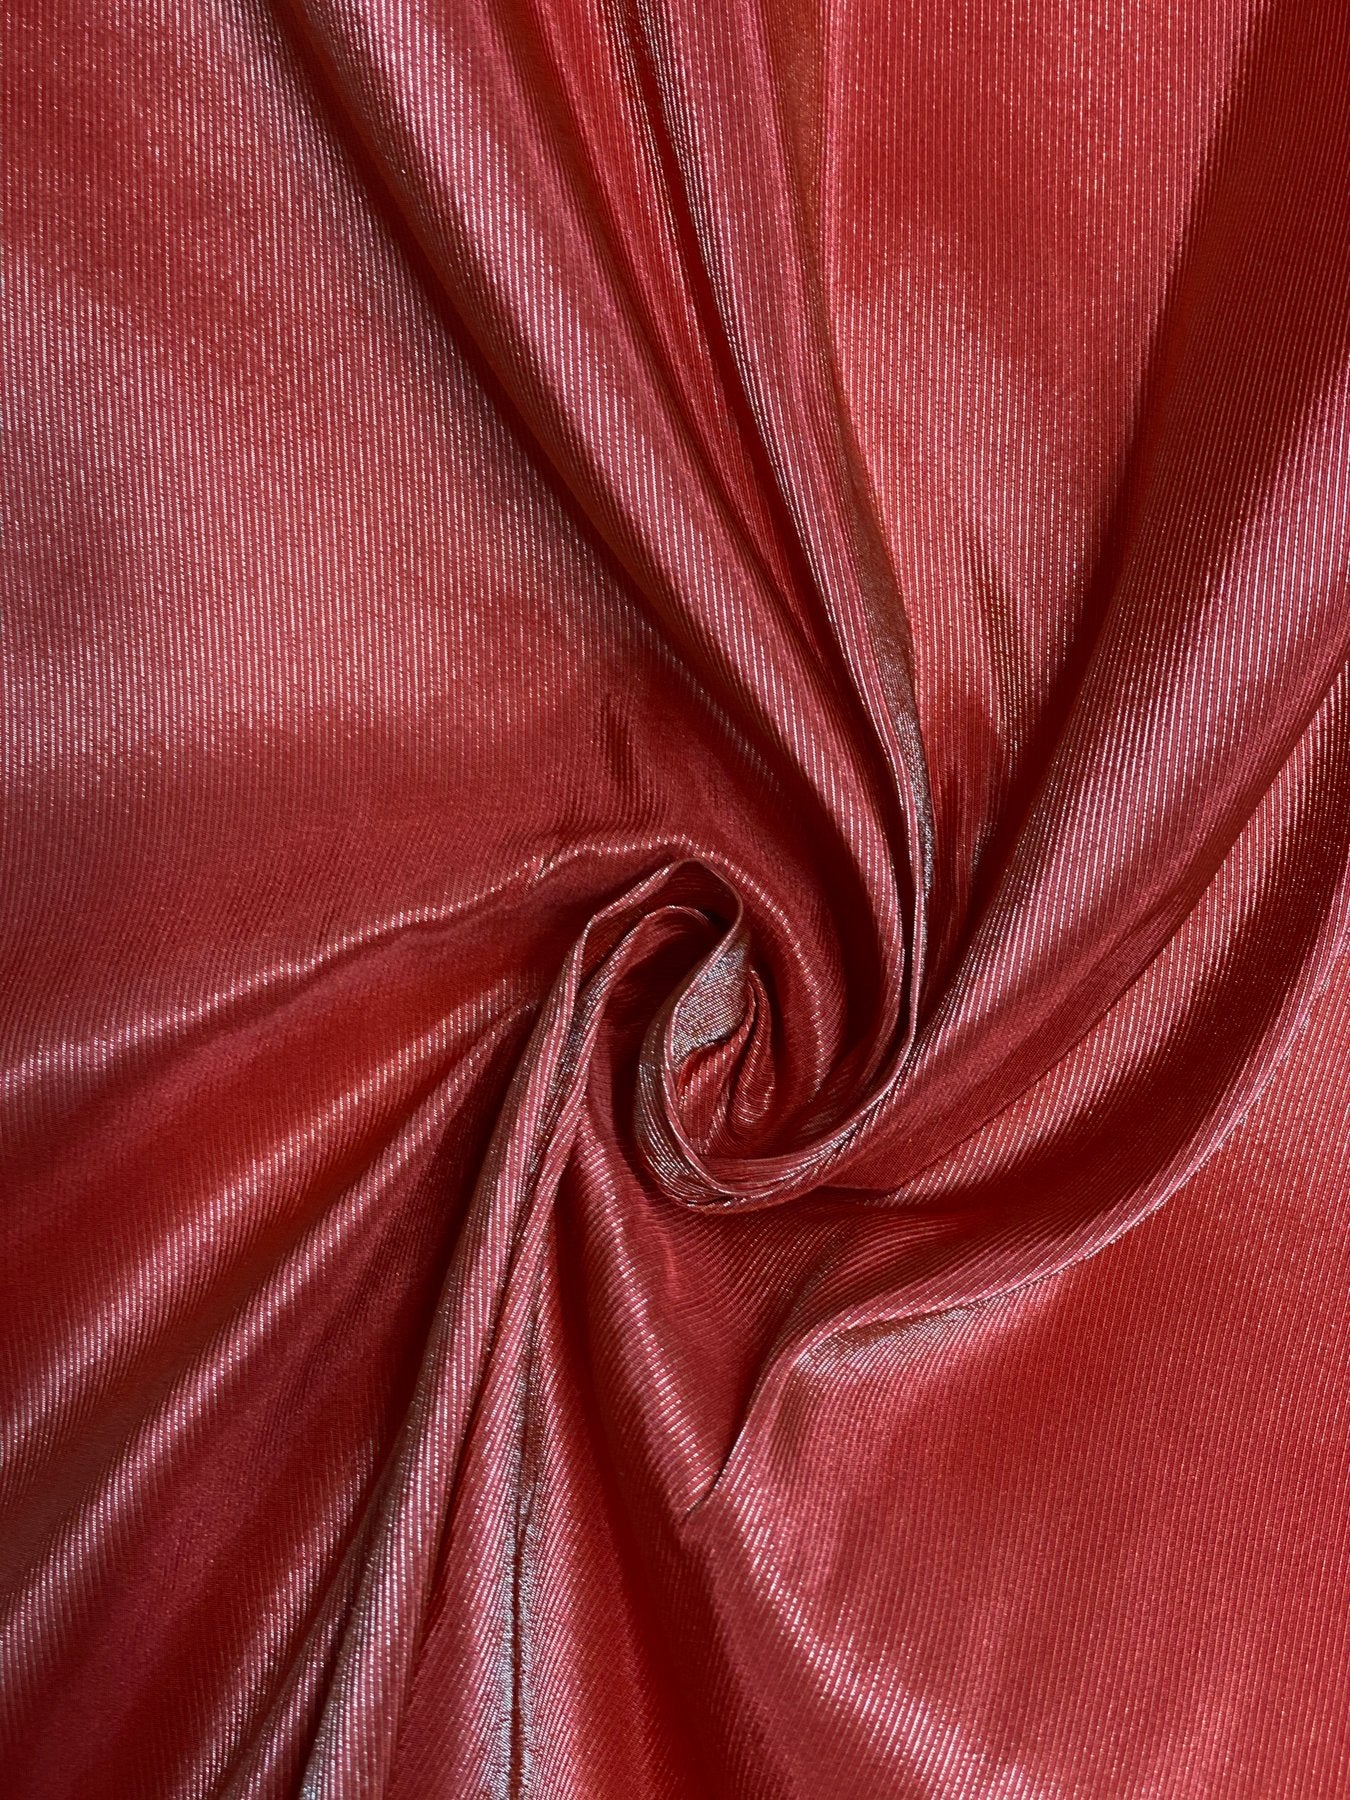 Red Gold Metallic Faille Fabric